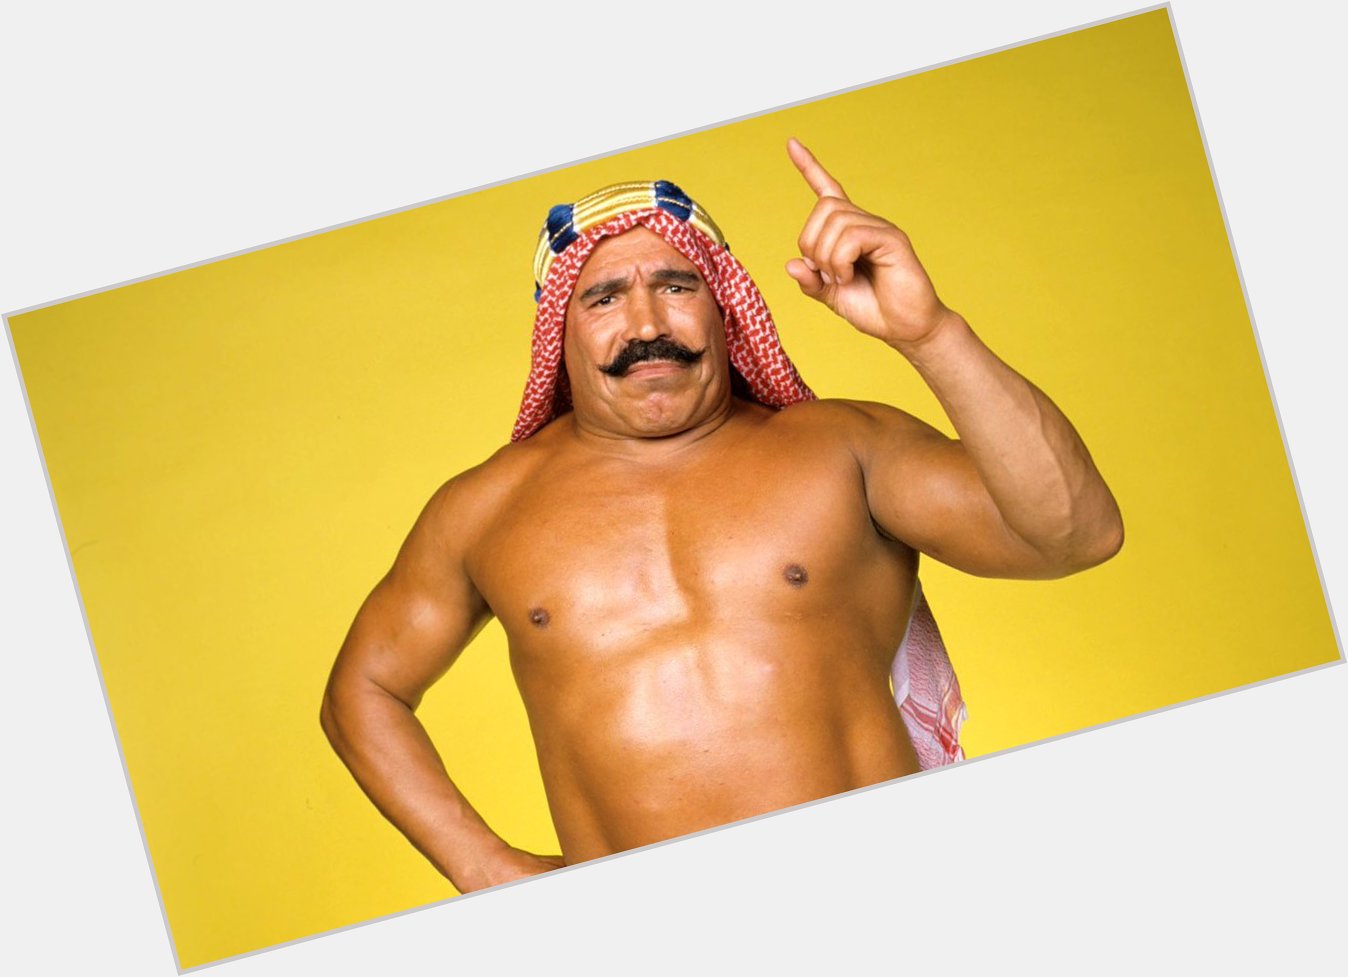  Happy Birthday to The Iron Sheik! Fuck The Hulk Hogan! 